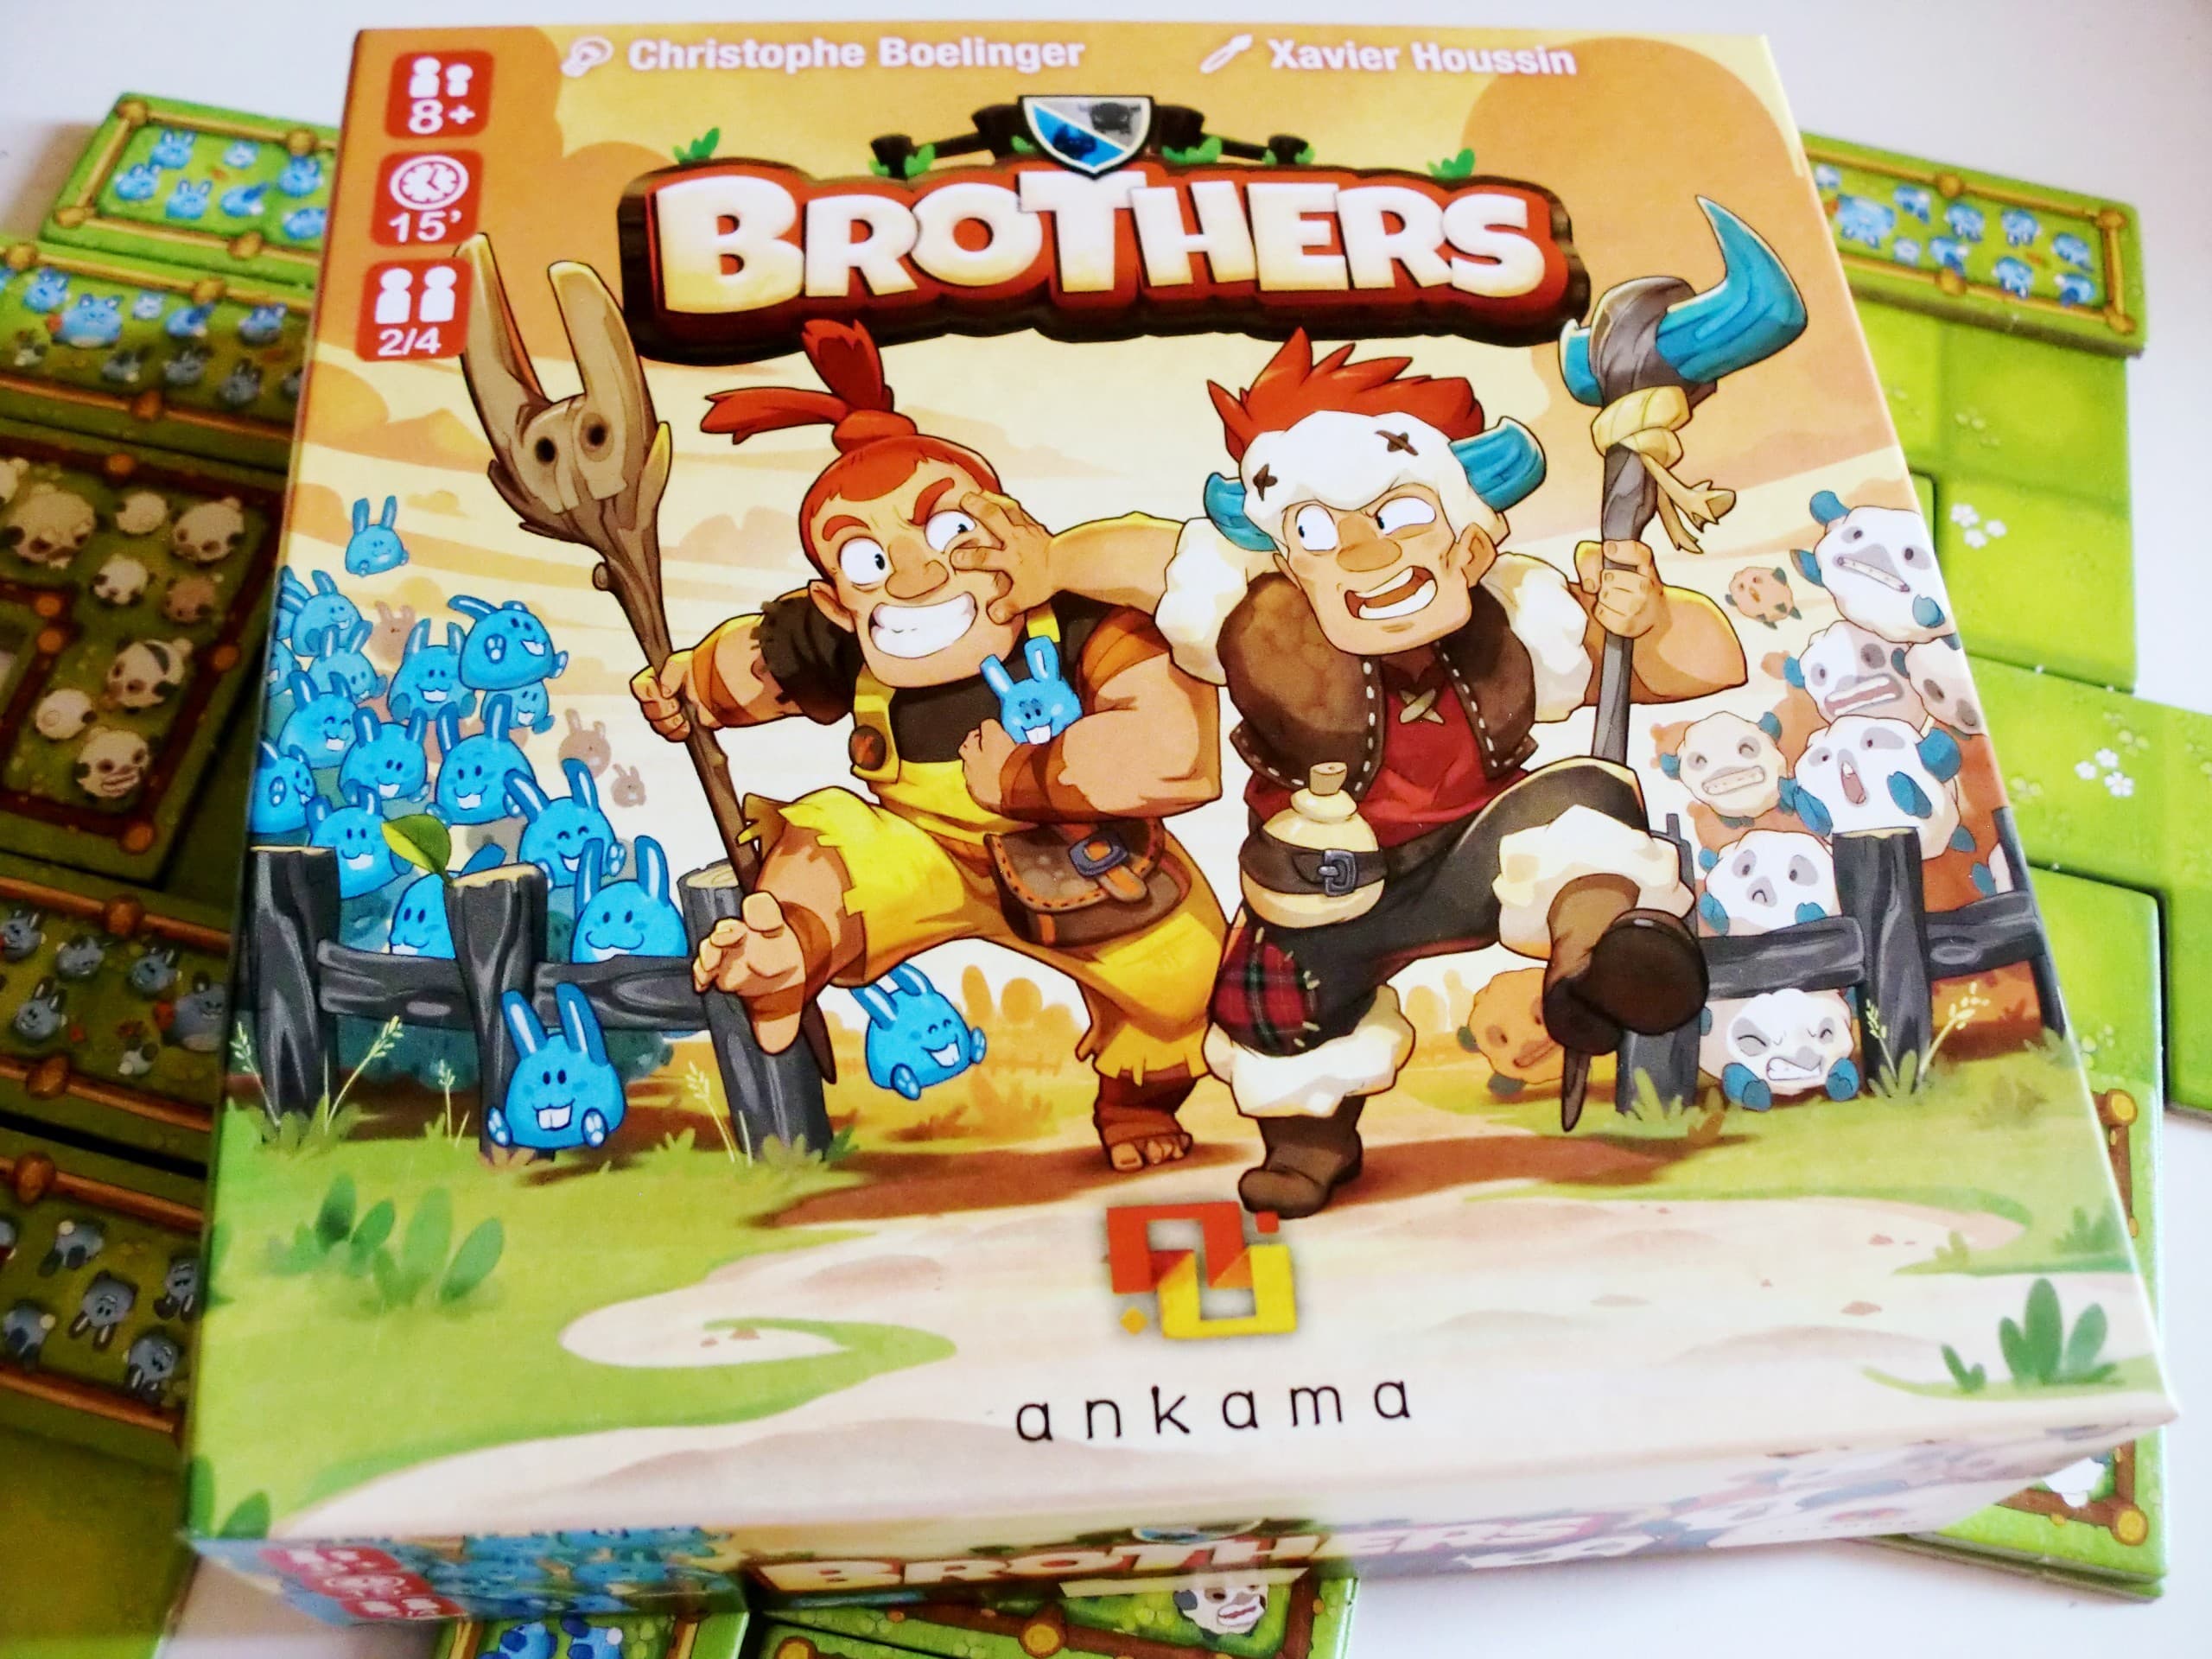 Critique de Brothers